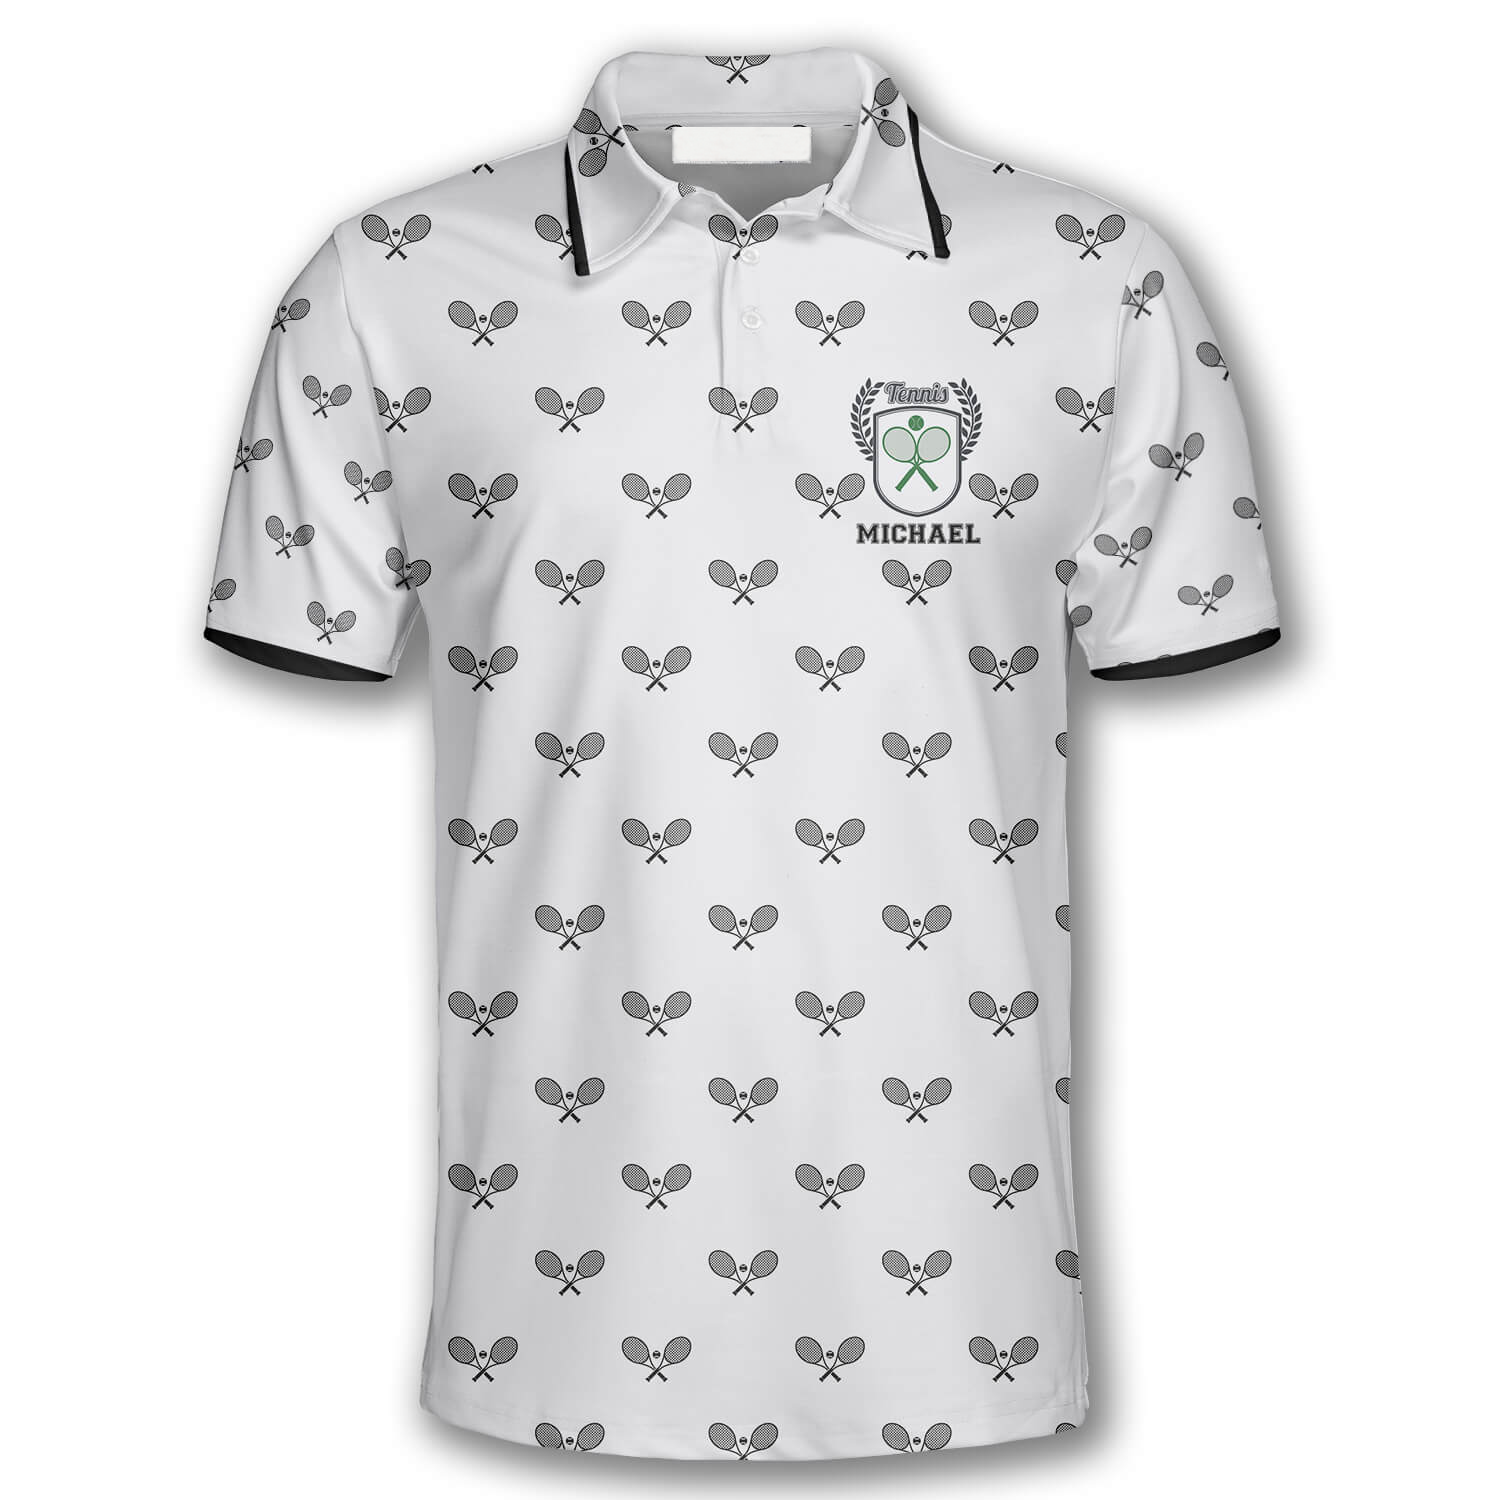 Tennis Pattern Emblem Custom Tennis Shirts for Men/ Gift for Tennis Player